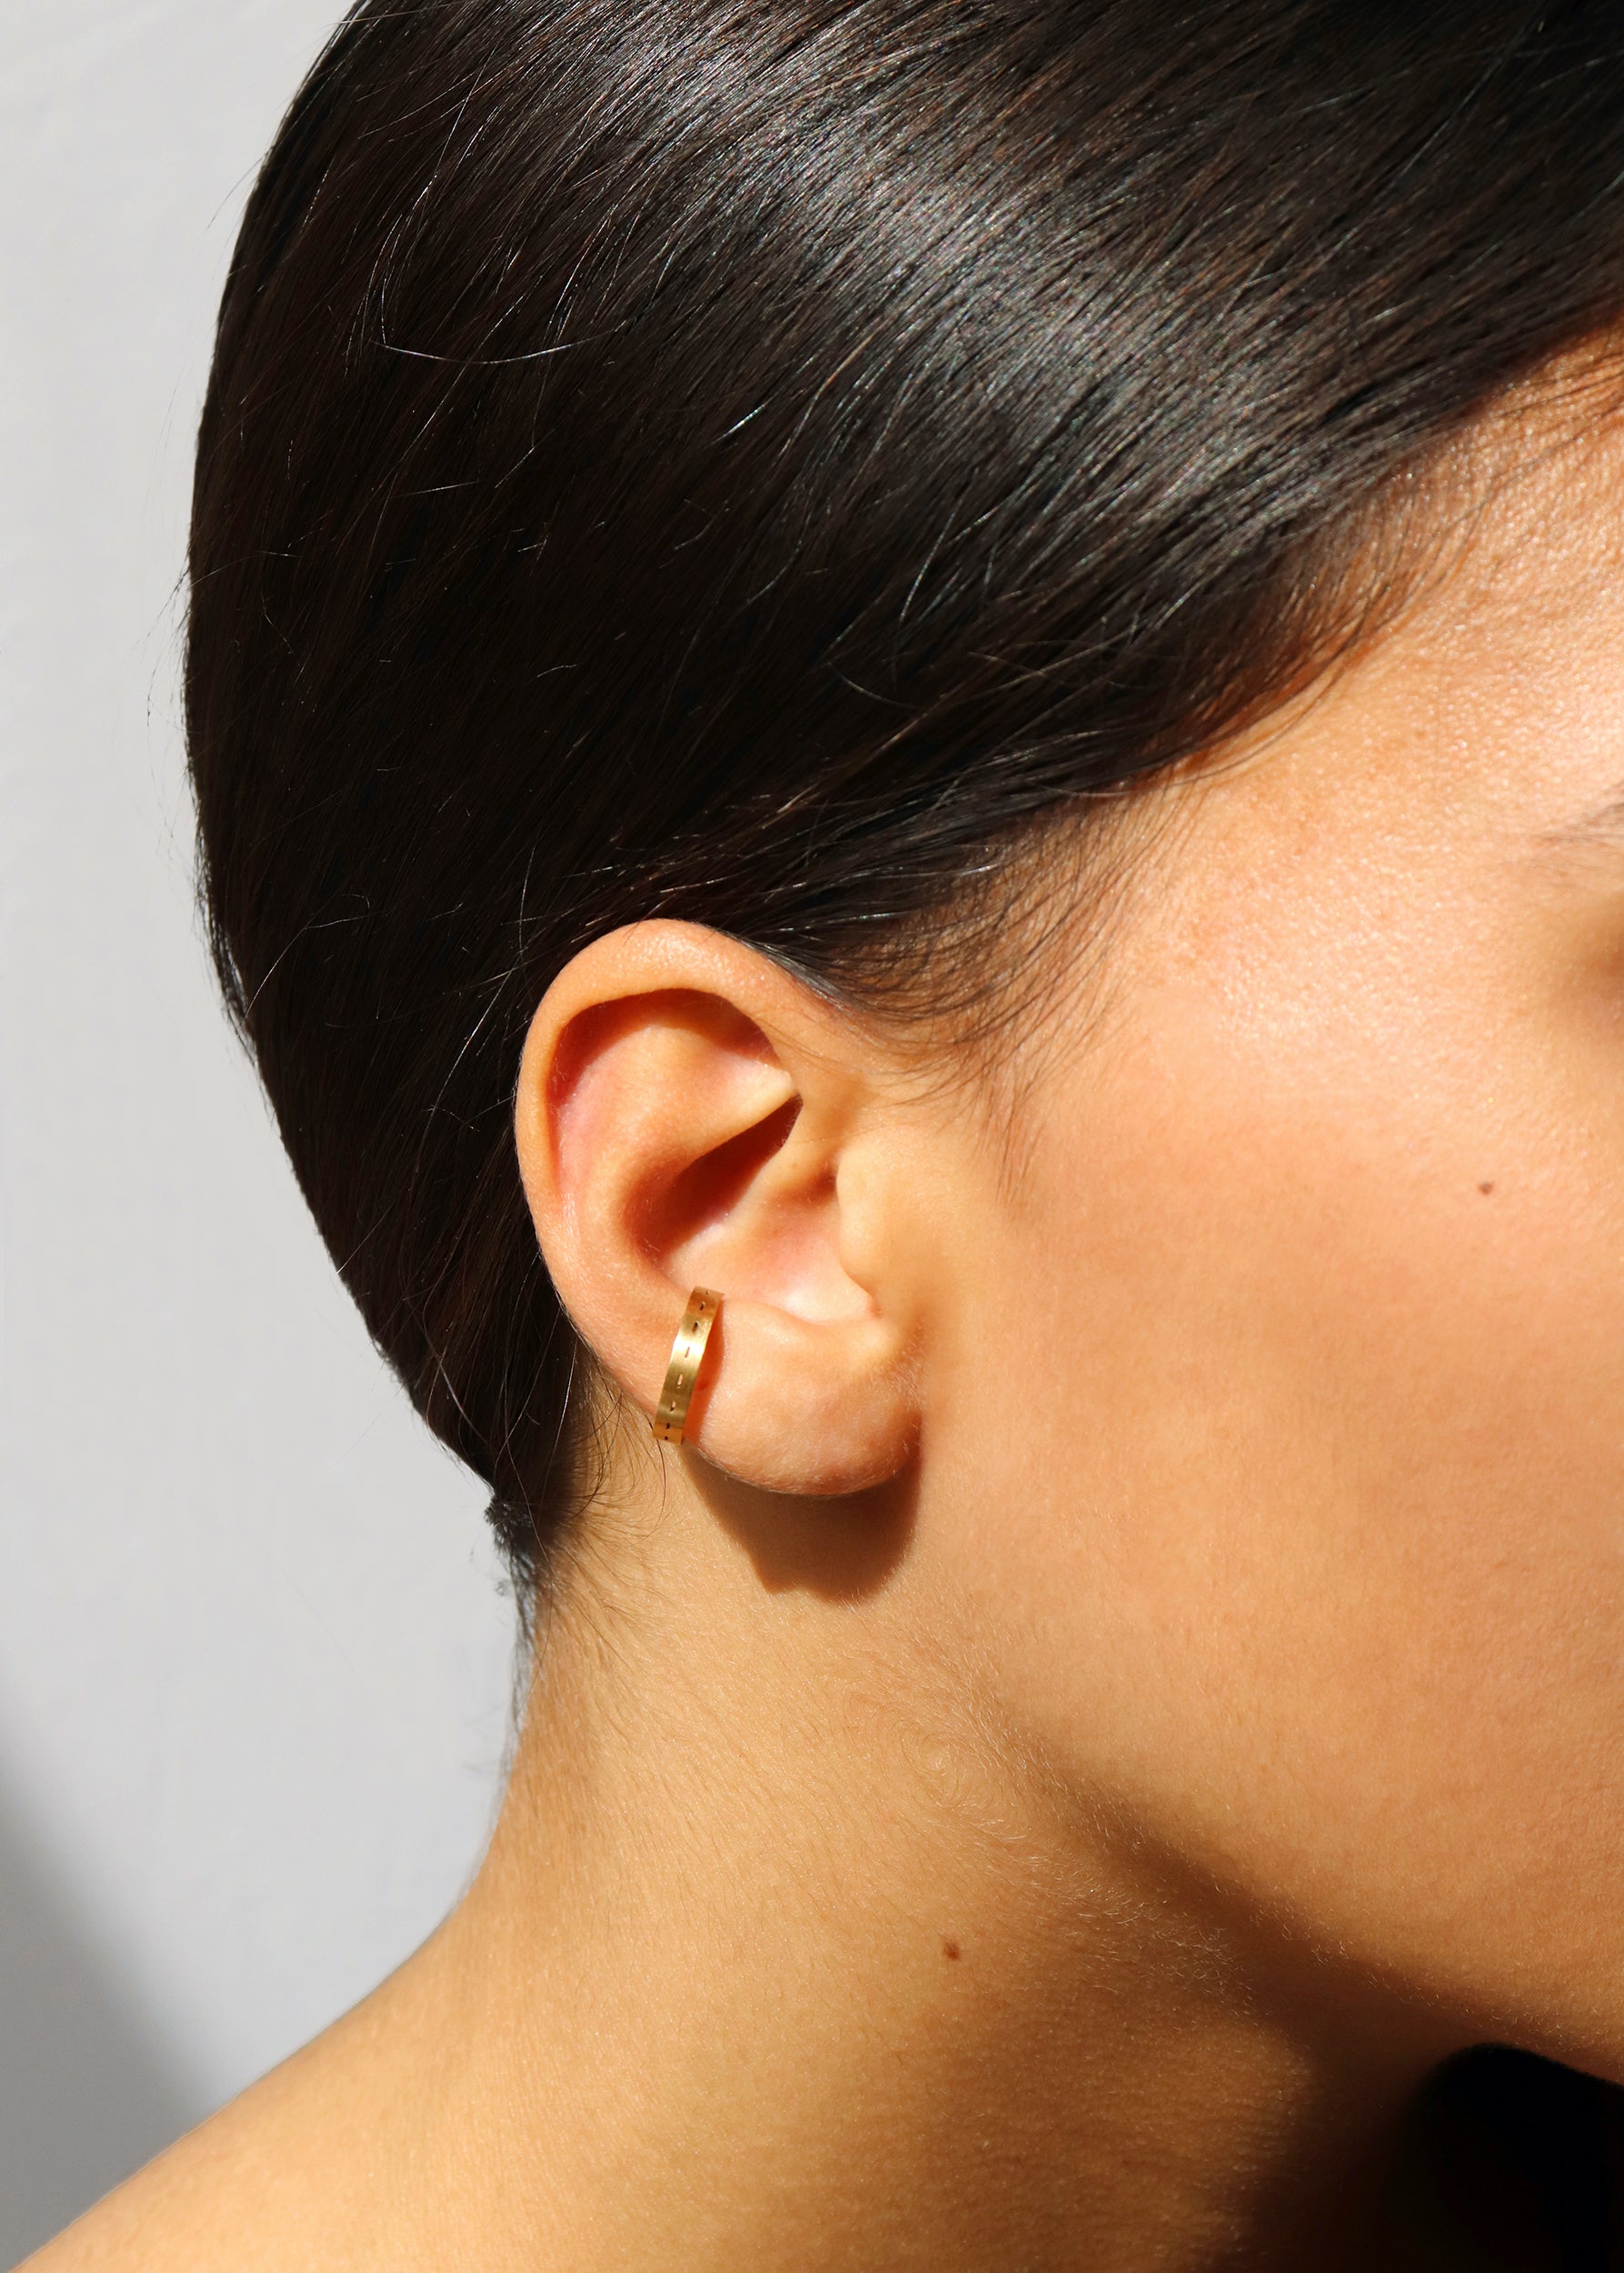 18KT yellow gold earring ear cuff worn by a female ear - Tratti 